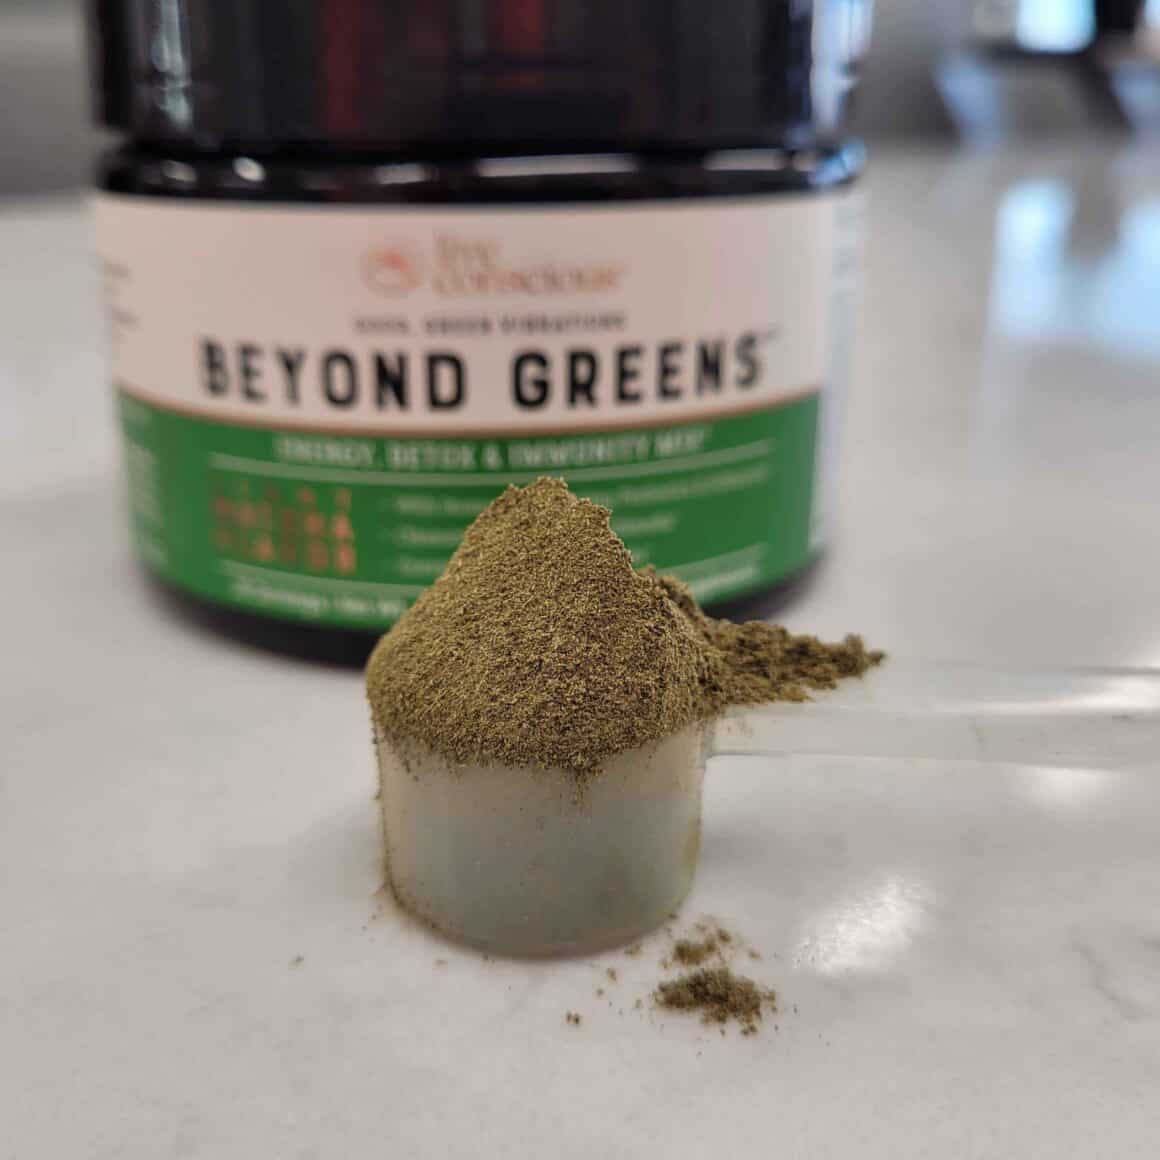 Beyond Greens Powder